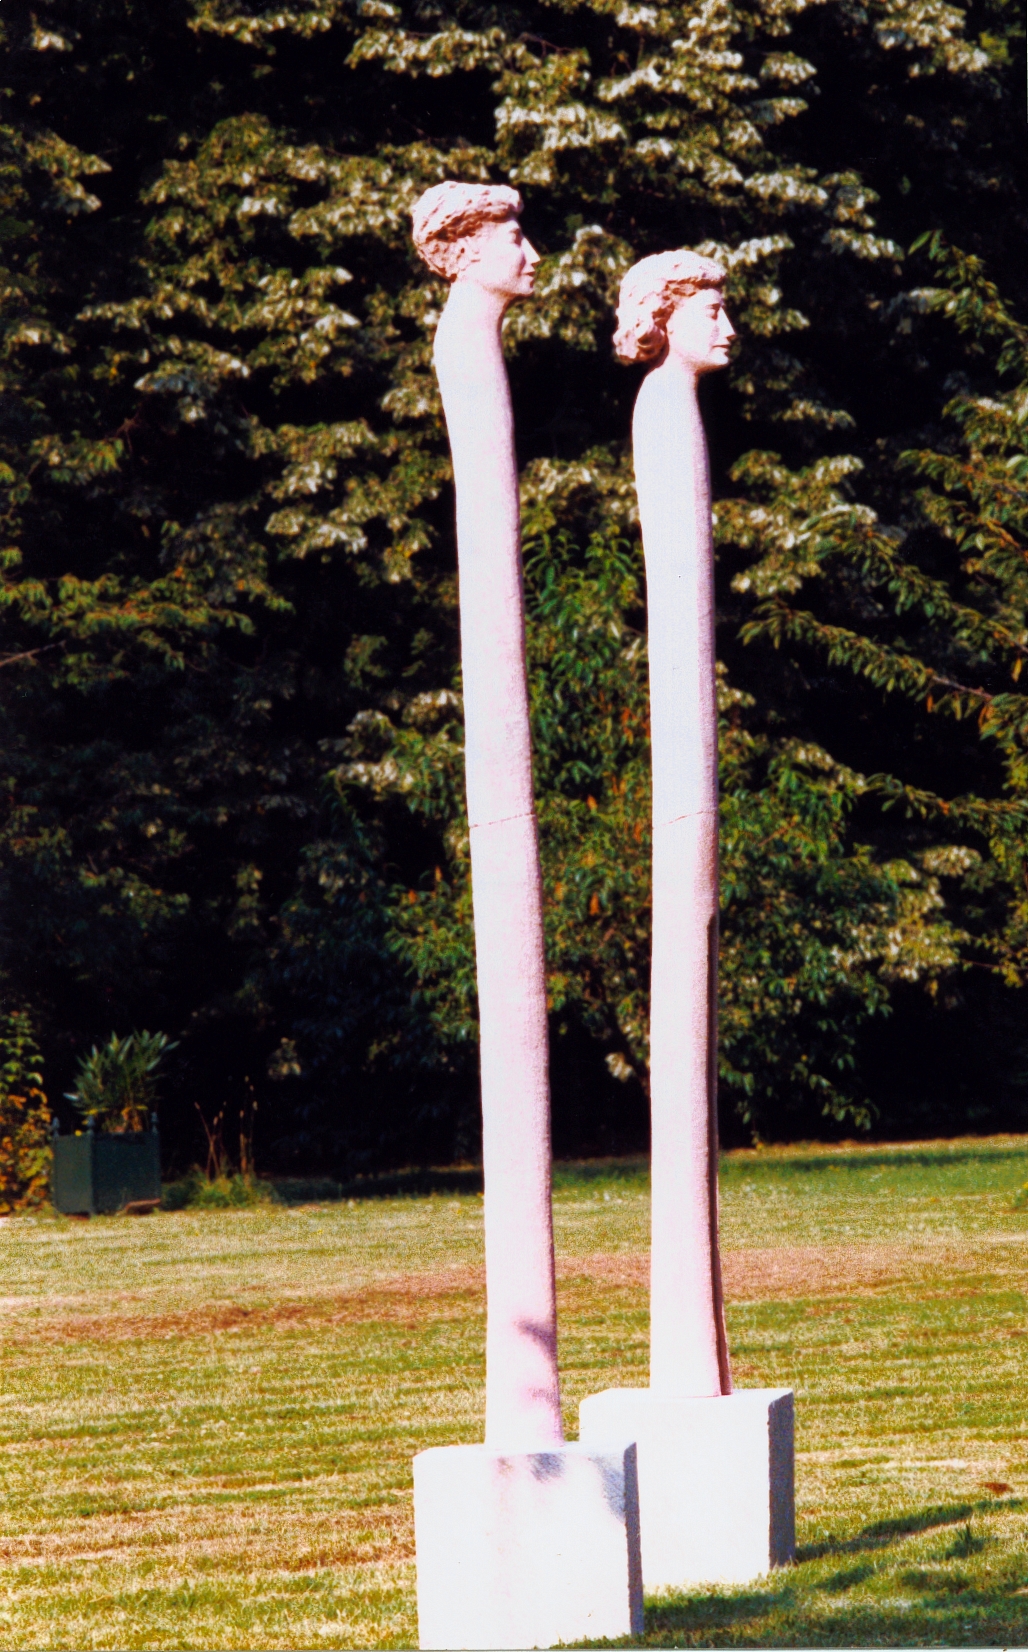 5 Terre cuite chamottée, 1998, h 185 cm, collection privée